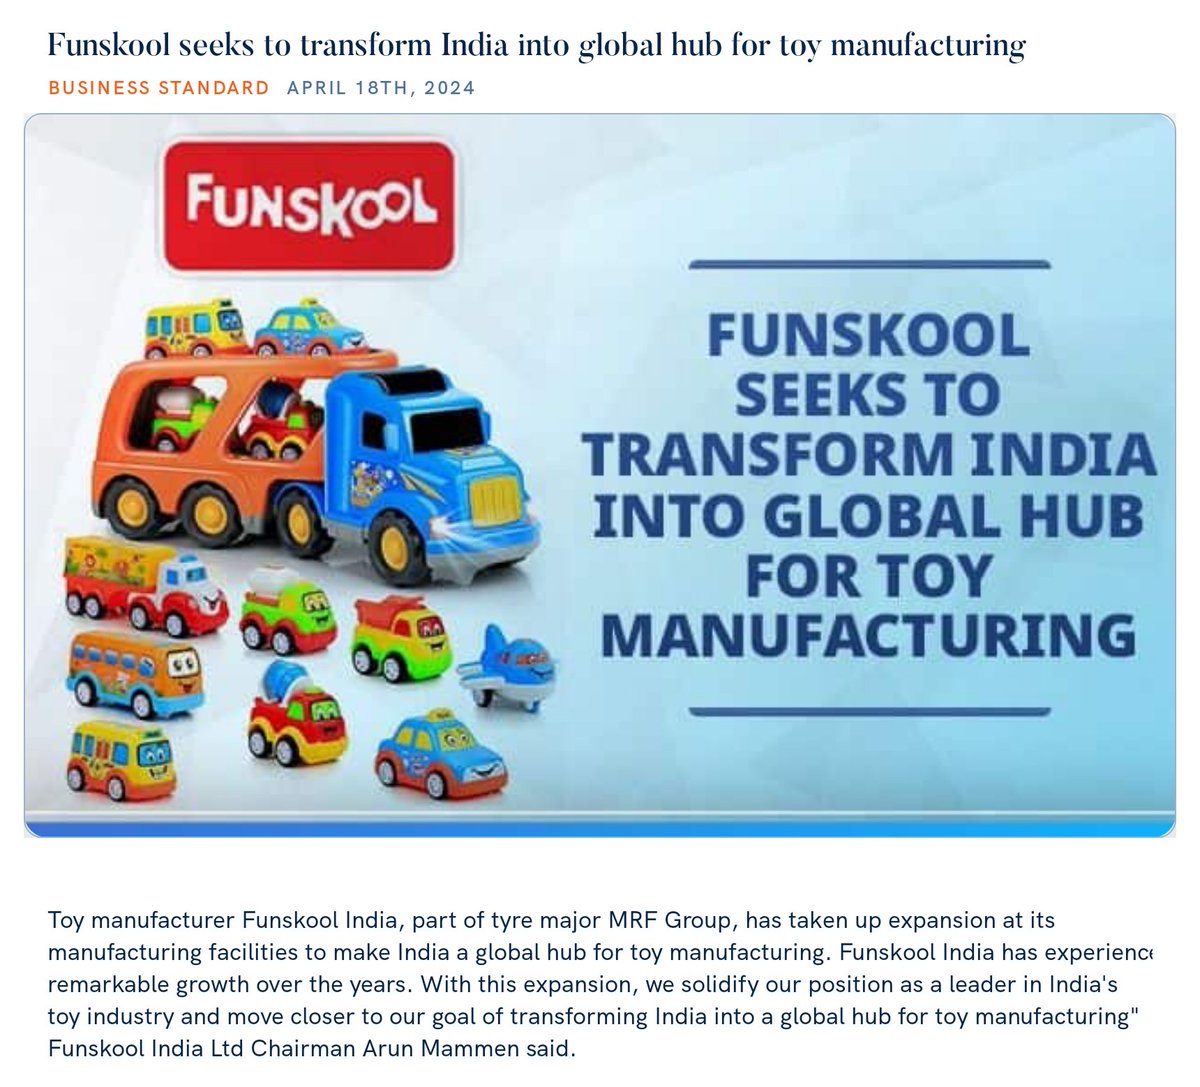 Funskool seeks to transform India into global hub for toy manufacturing
business-standard.com/companies/news… via NaMo App
काशी बनारस वाराणसी
Kashi Banaras Varanasi
#SankalpitKashi